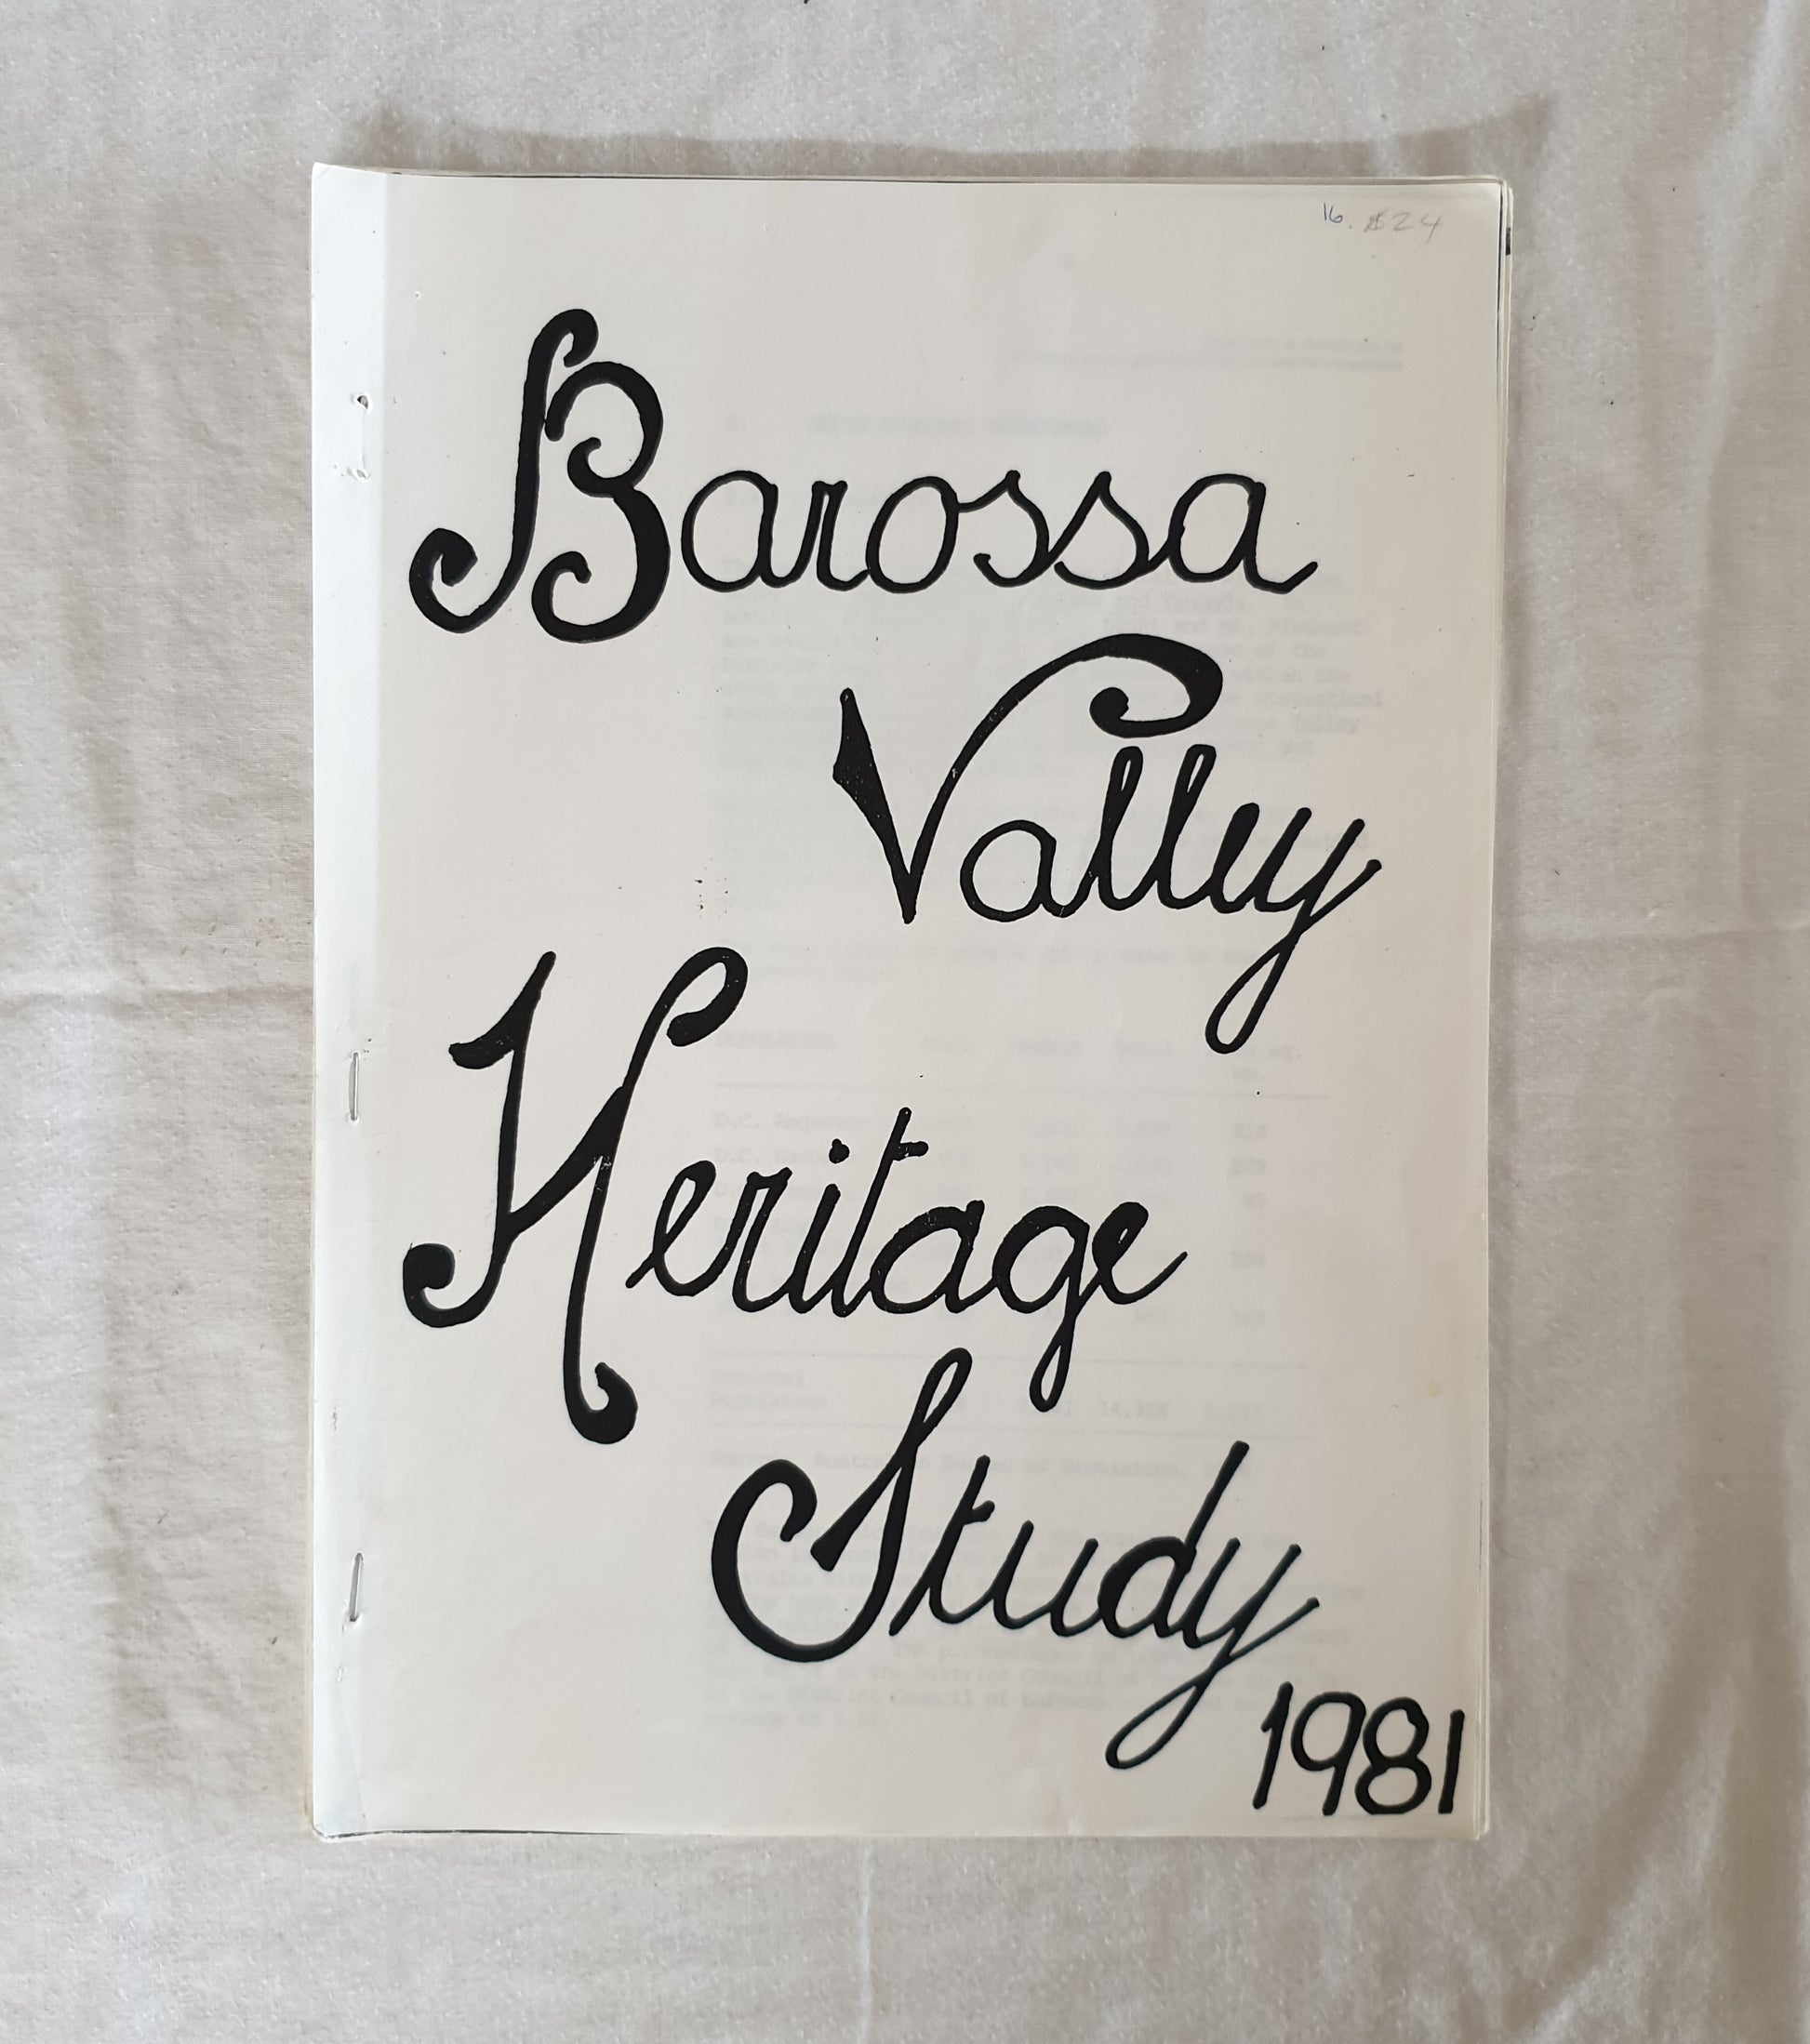 Barossa Valley Heritage Study 1981 